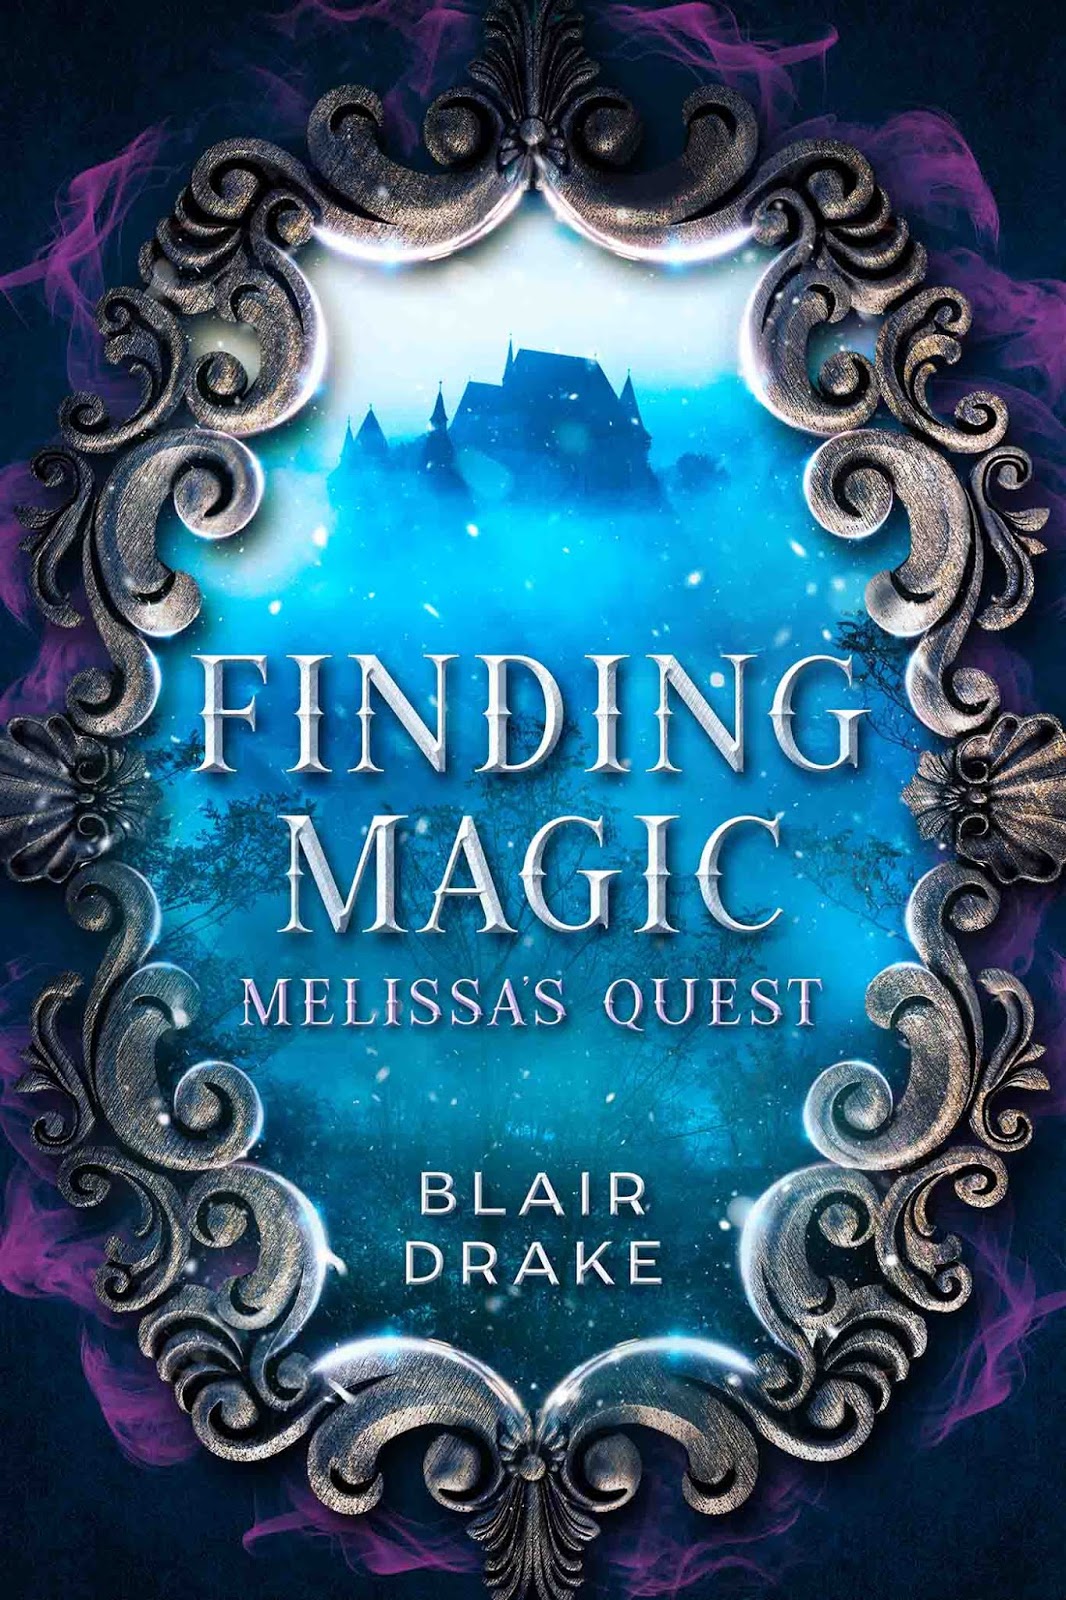 Find the magic. Magic book 5. Beauty Bay book of Magic. Find Quest. About my Magical book.